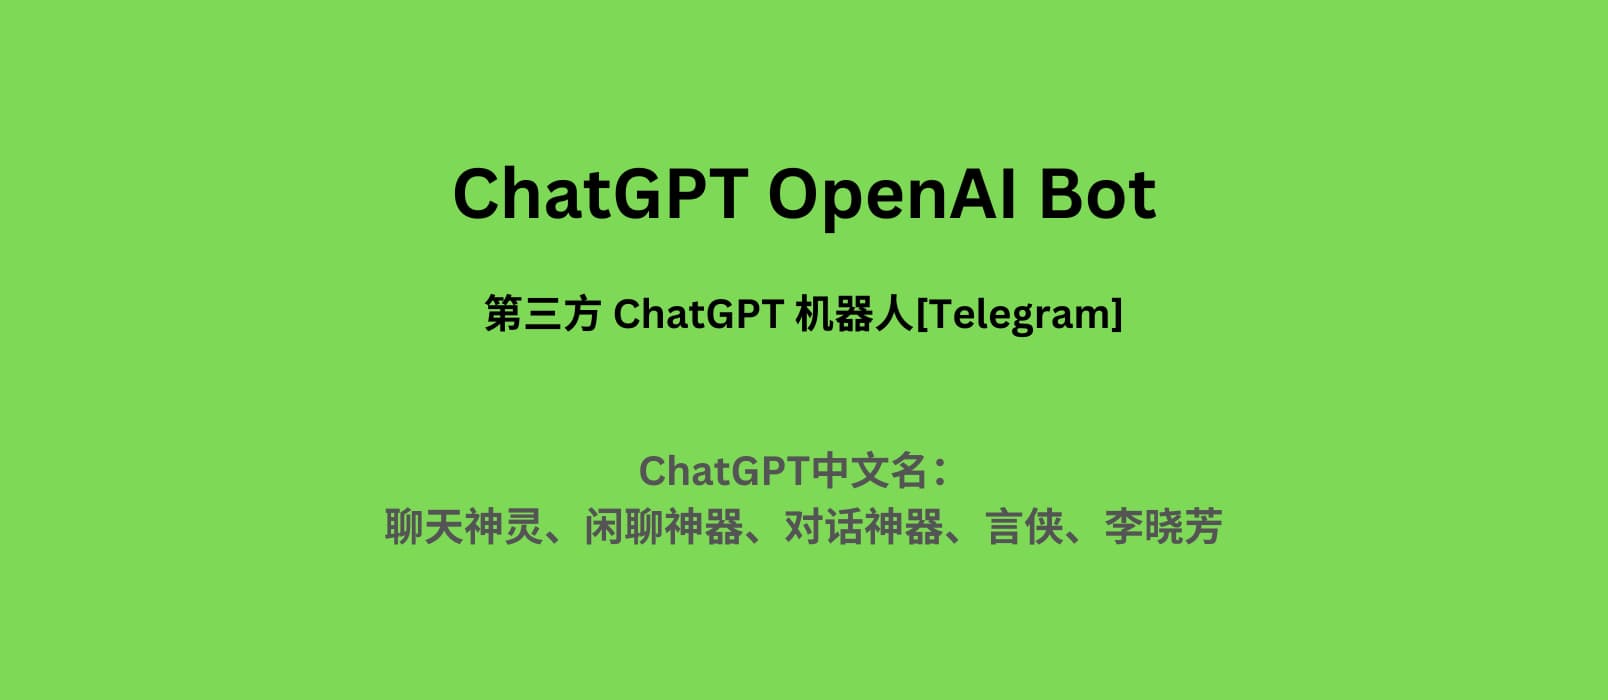 ChatGPT OpenAI Bot - 每 60 秒问一次，无需注册的第三方 ChatGPT 机器人｜ChatGPT 中文名就这么定了 1